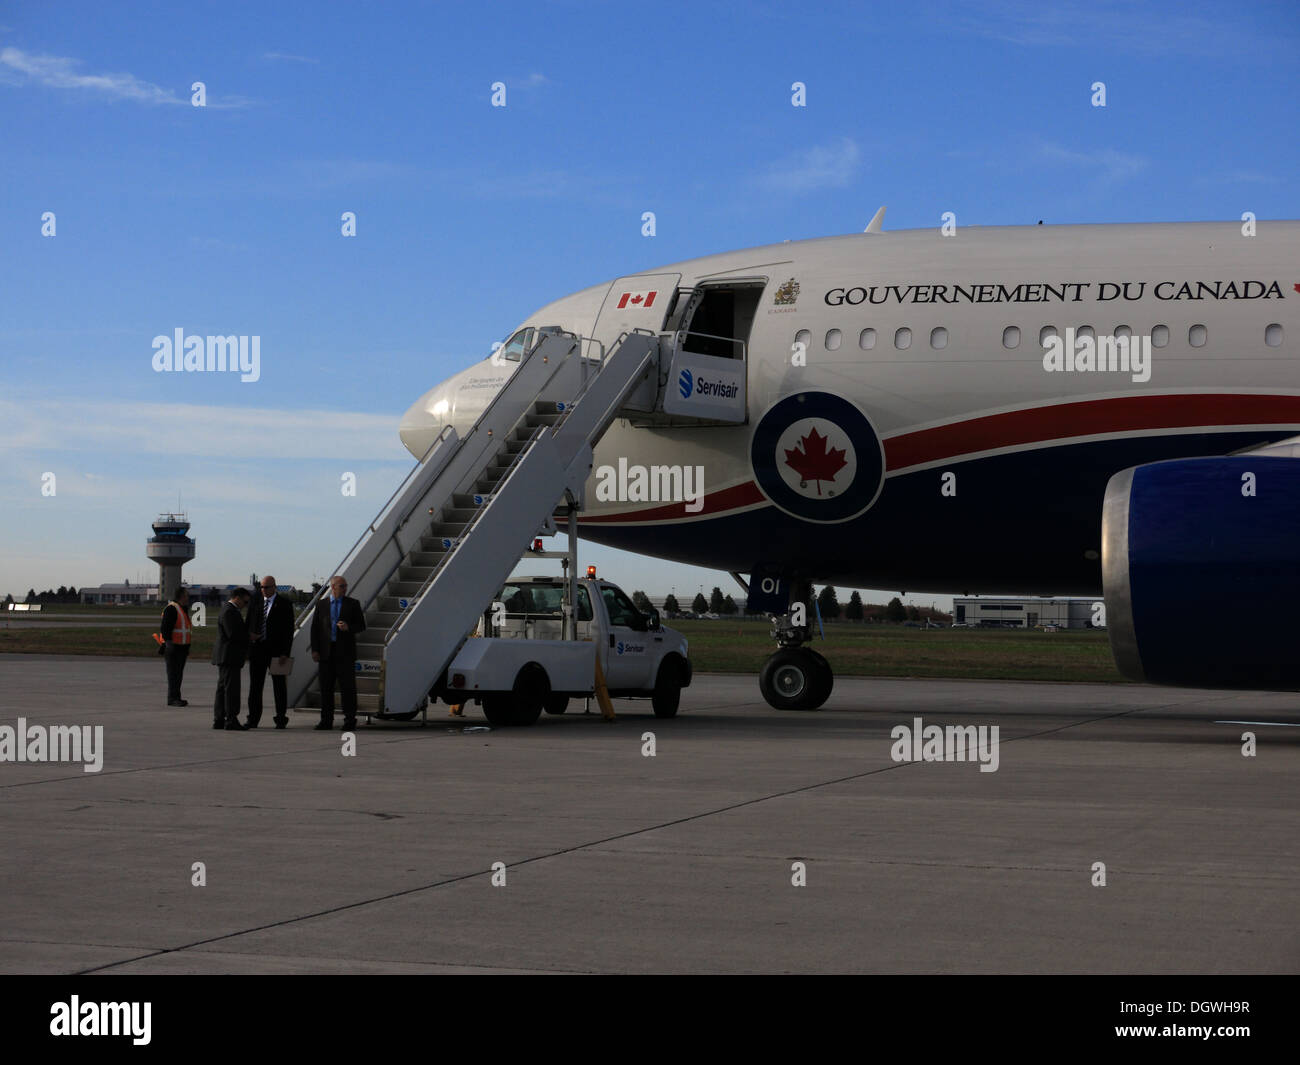 Airbus CC-150 Polaris, RCAF 01, Canada Government VIP Airplane in Ottawa airport, Canada, October 3, 2013 Stock Photo